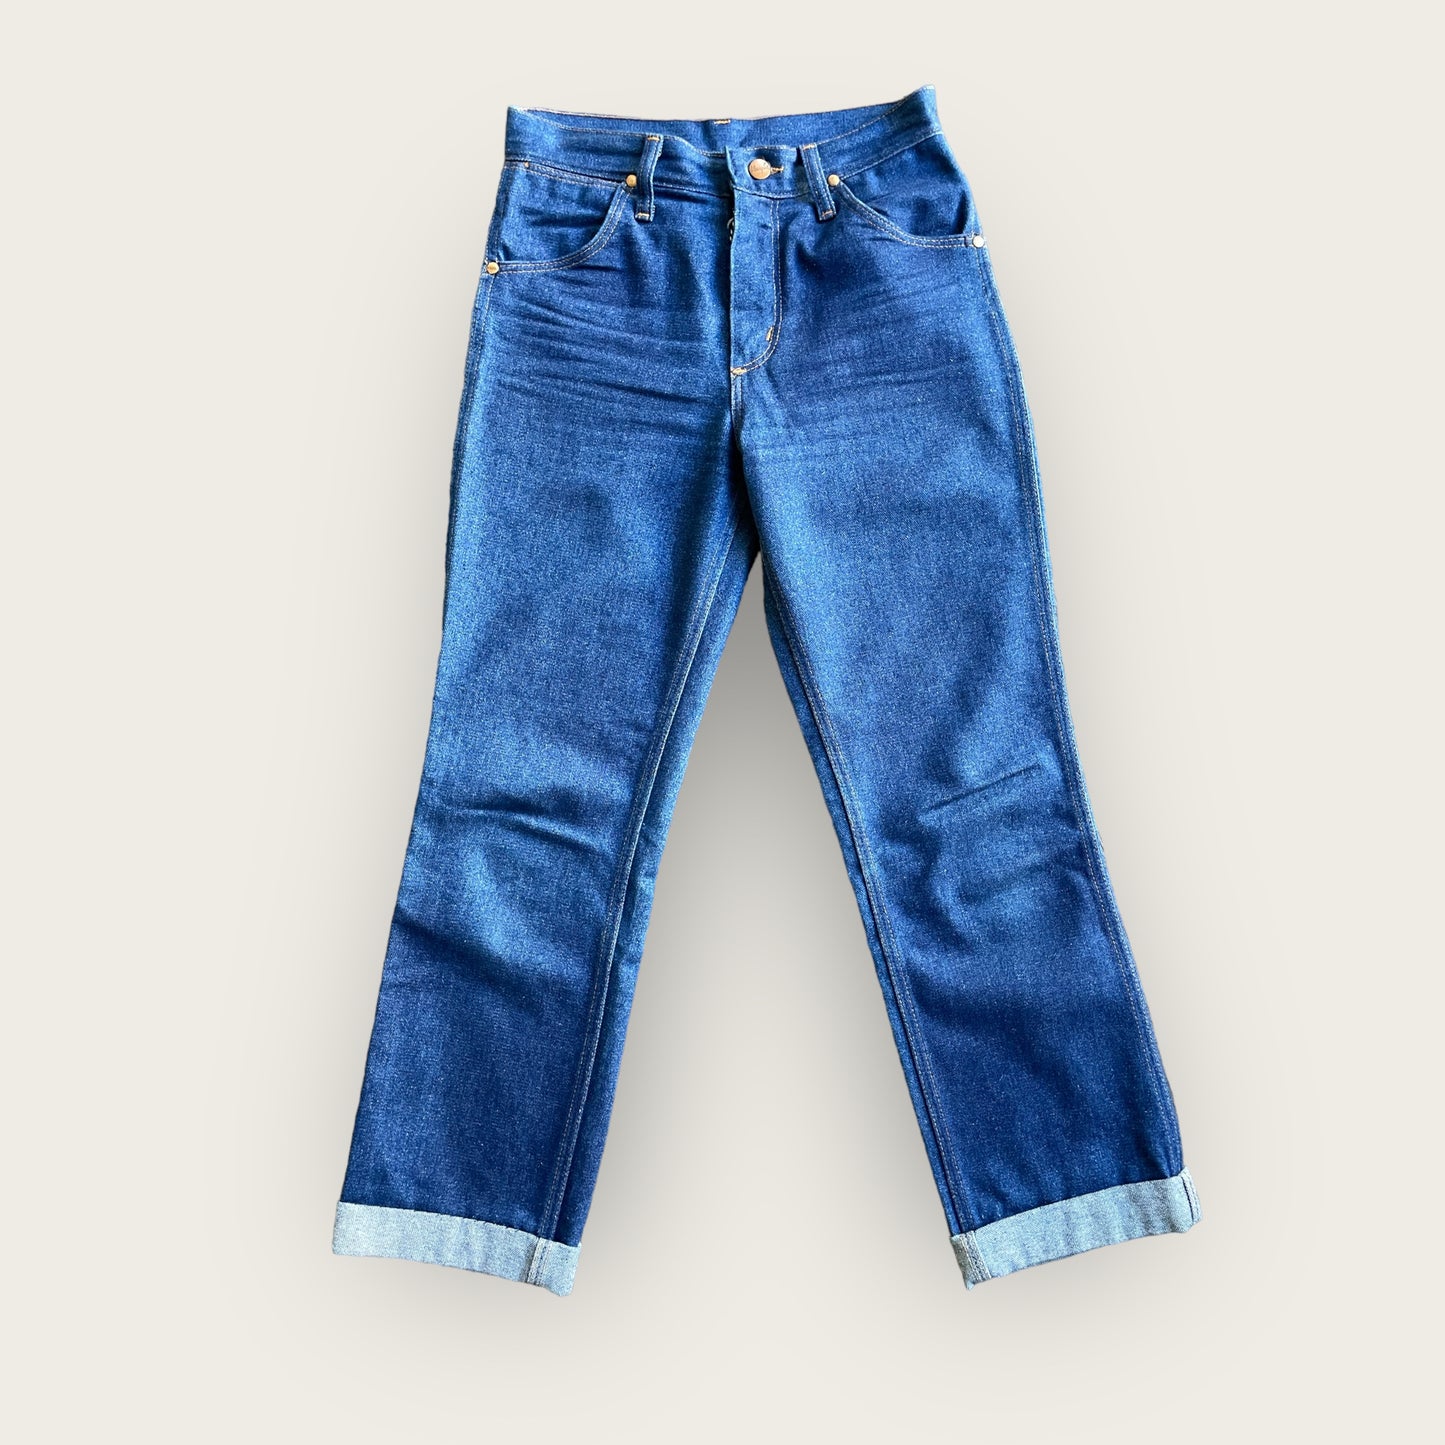 Wranglers jeans vintage -27x32